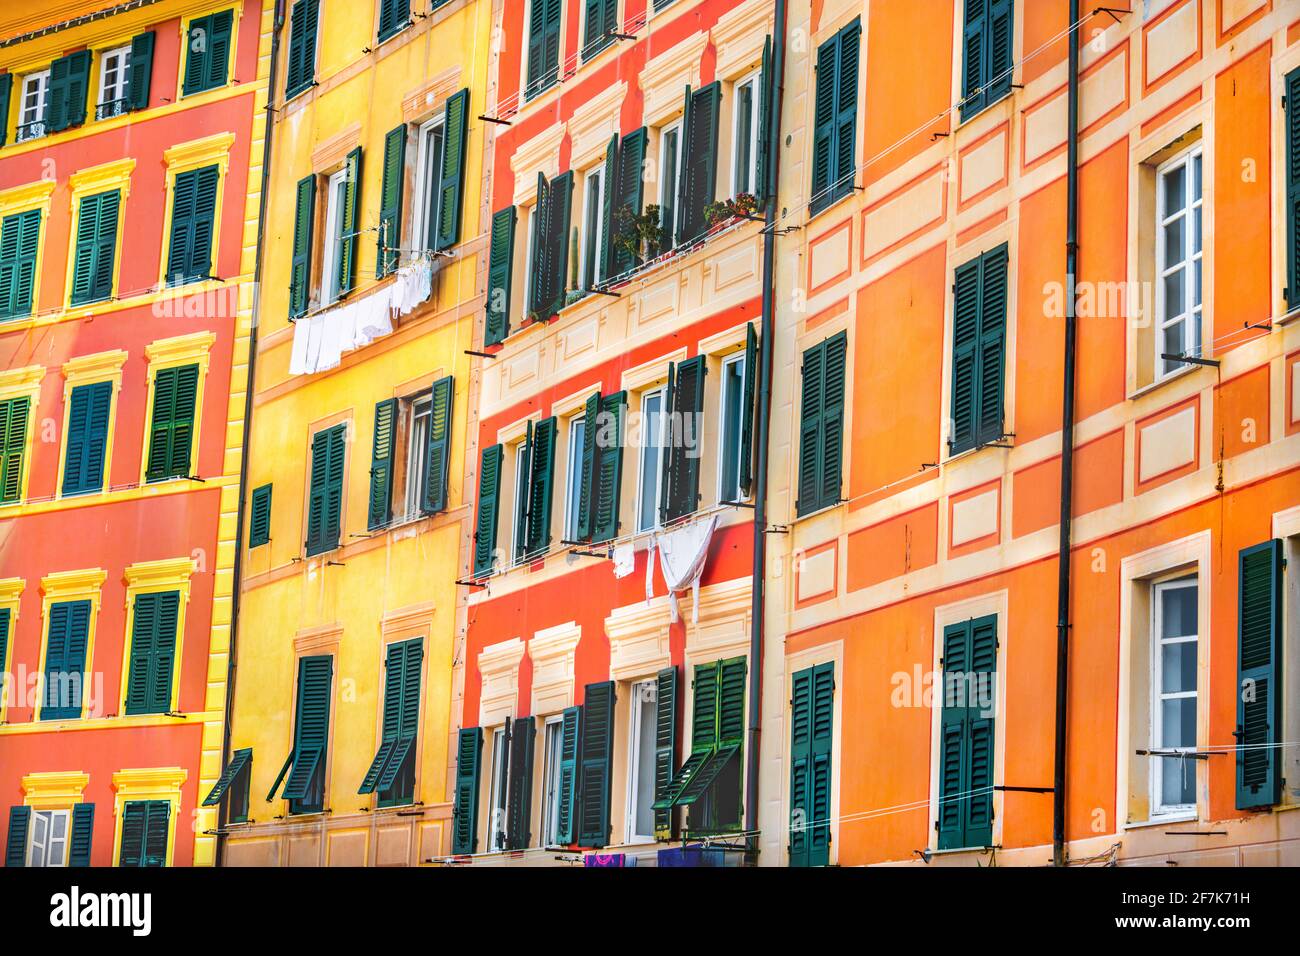 Italian style windows orange yellow buildings intense colorful background texture Stock Photo